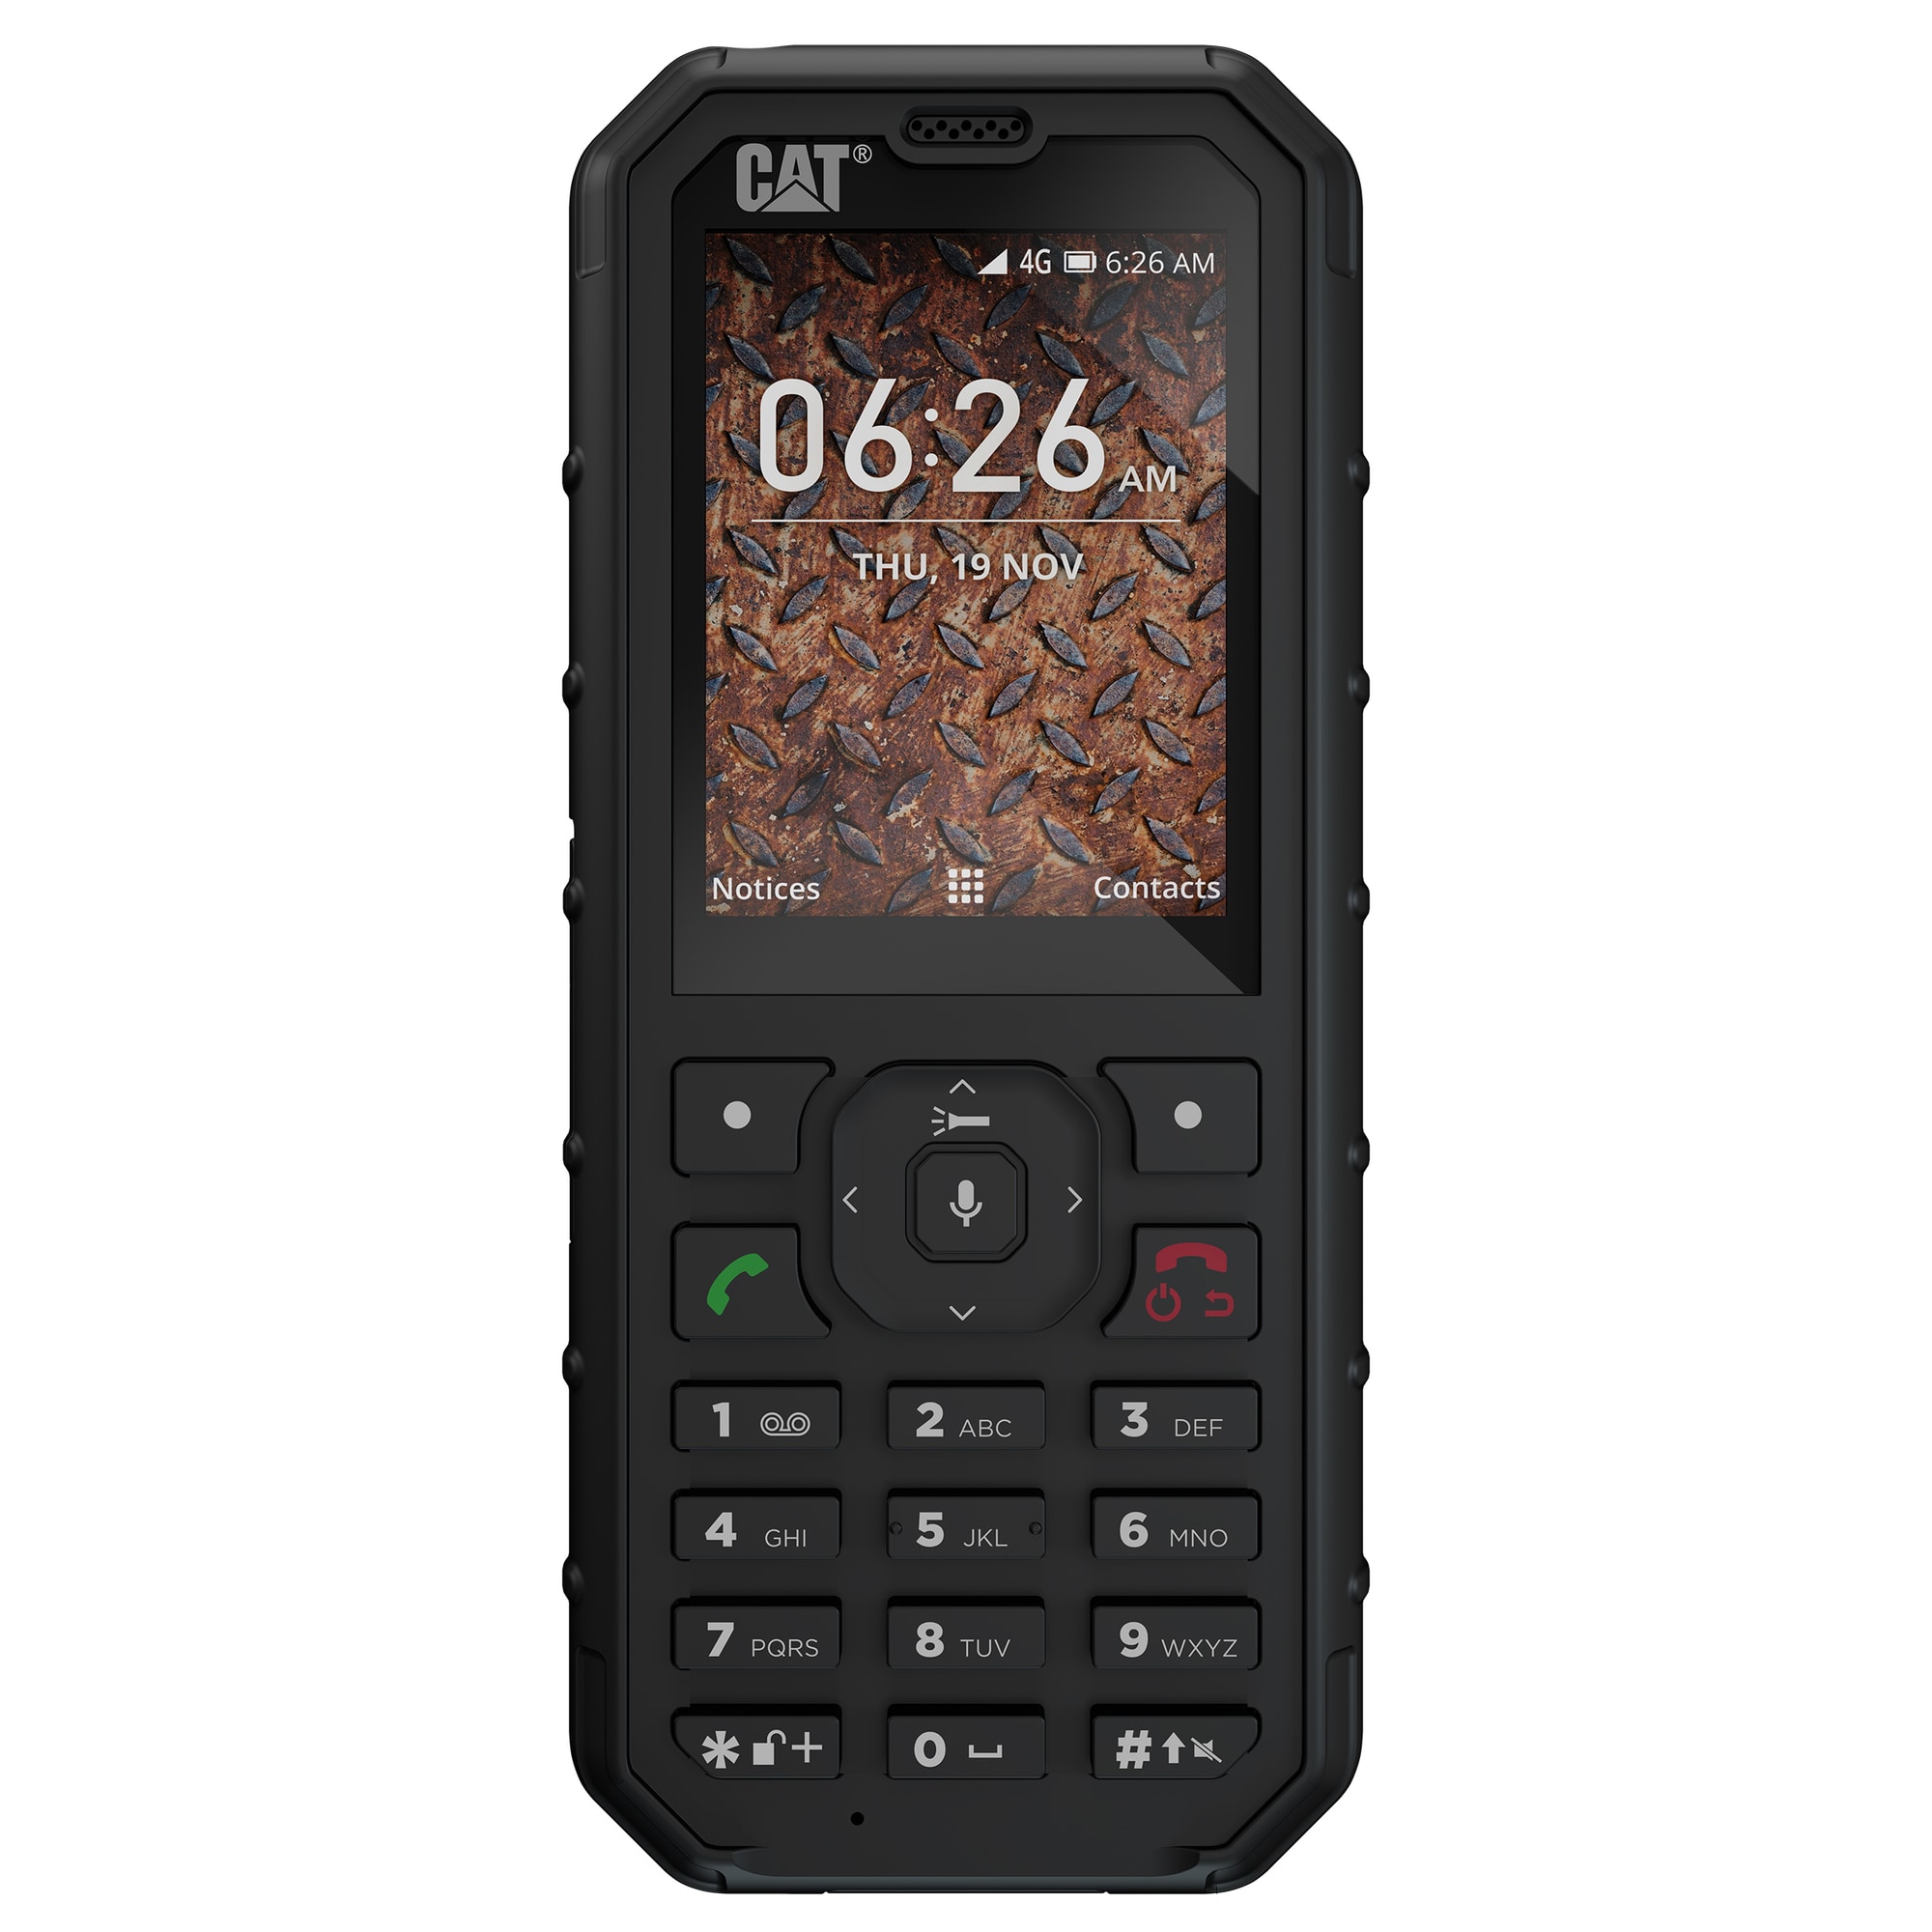 Cat B35 4G mobiltelefon (sort) - Mobiltelefoner - Elgiganten